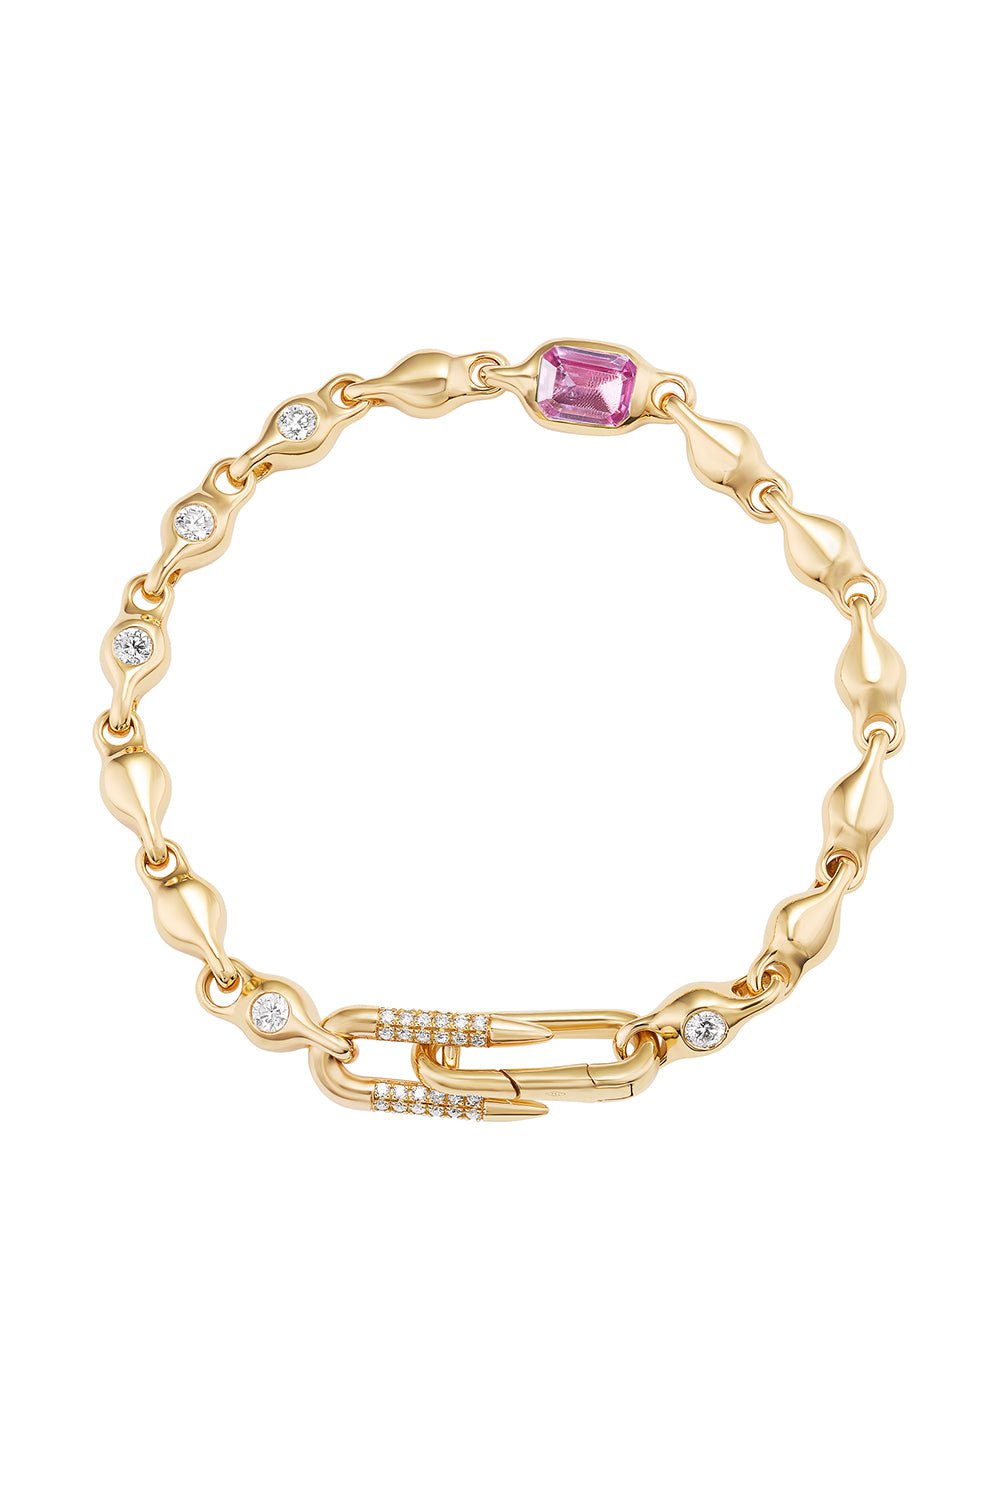 UNIFORM OBJECT-Pink Sapphire Reflection Bracelet-YELLOW GOLD